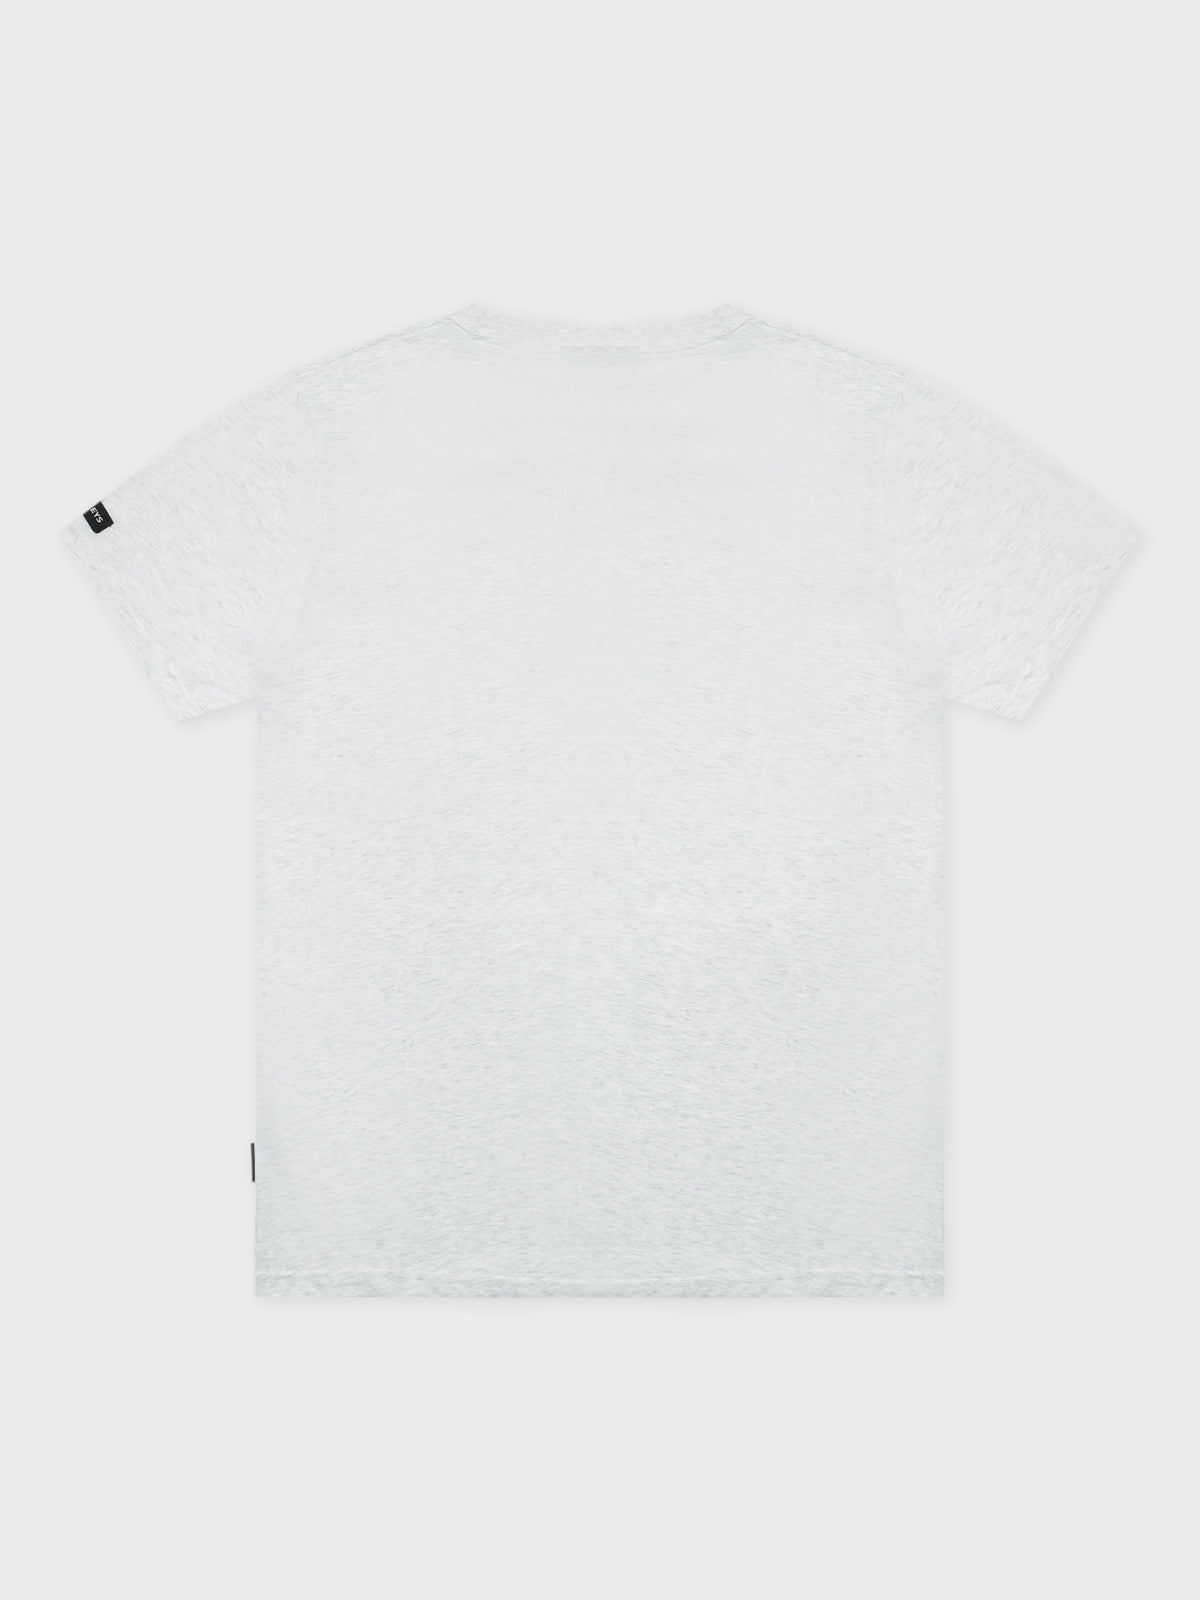 Legion T-Shirt in Snow Marle &amp; Black